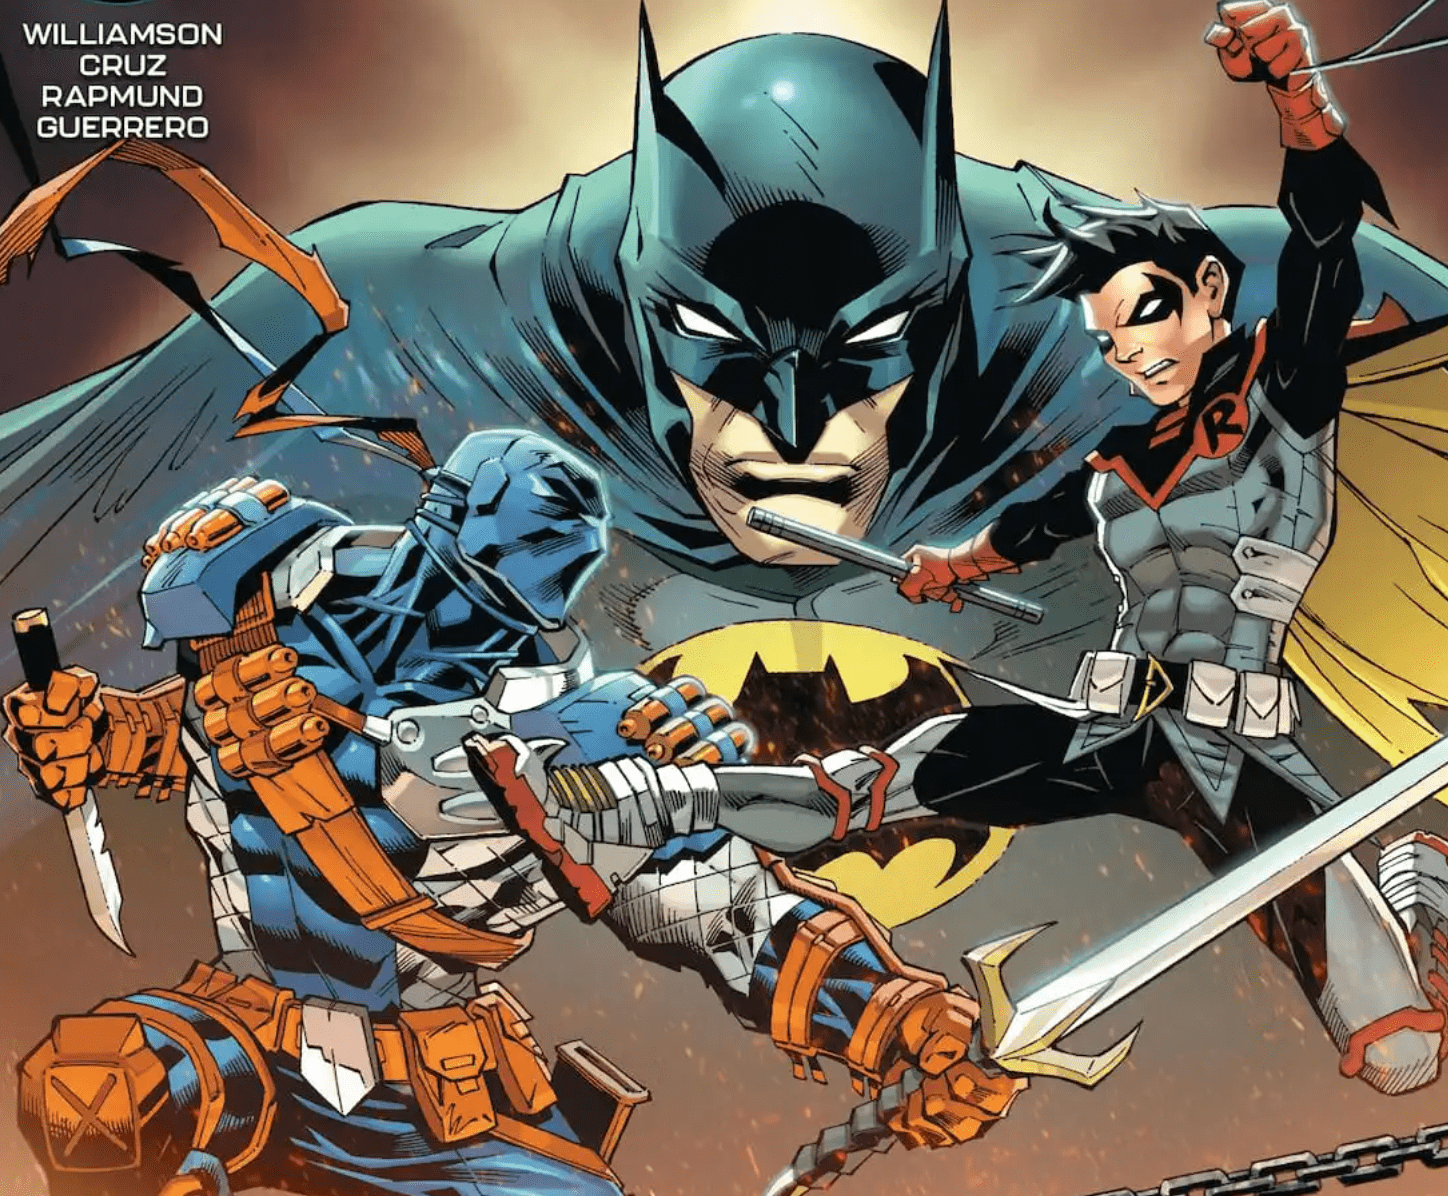 'Robin' #13 shifts the power towards Batman's side